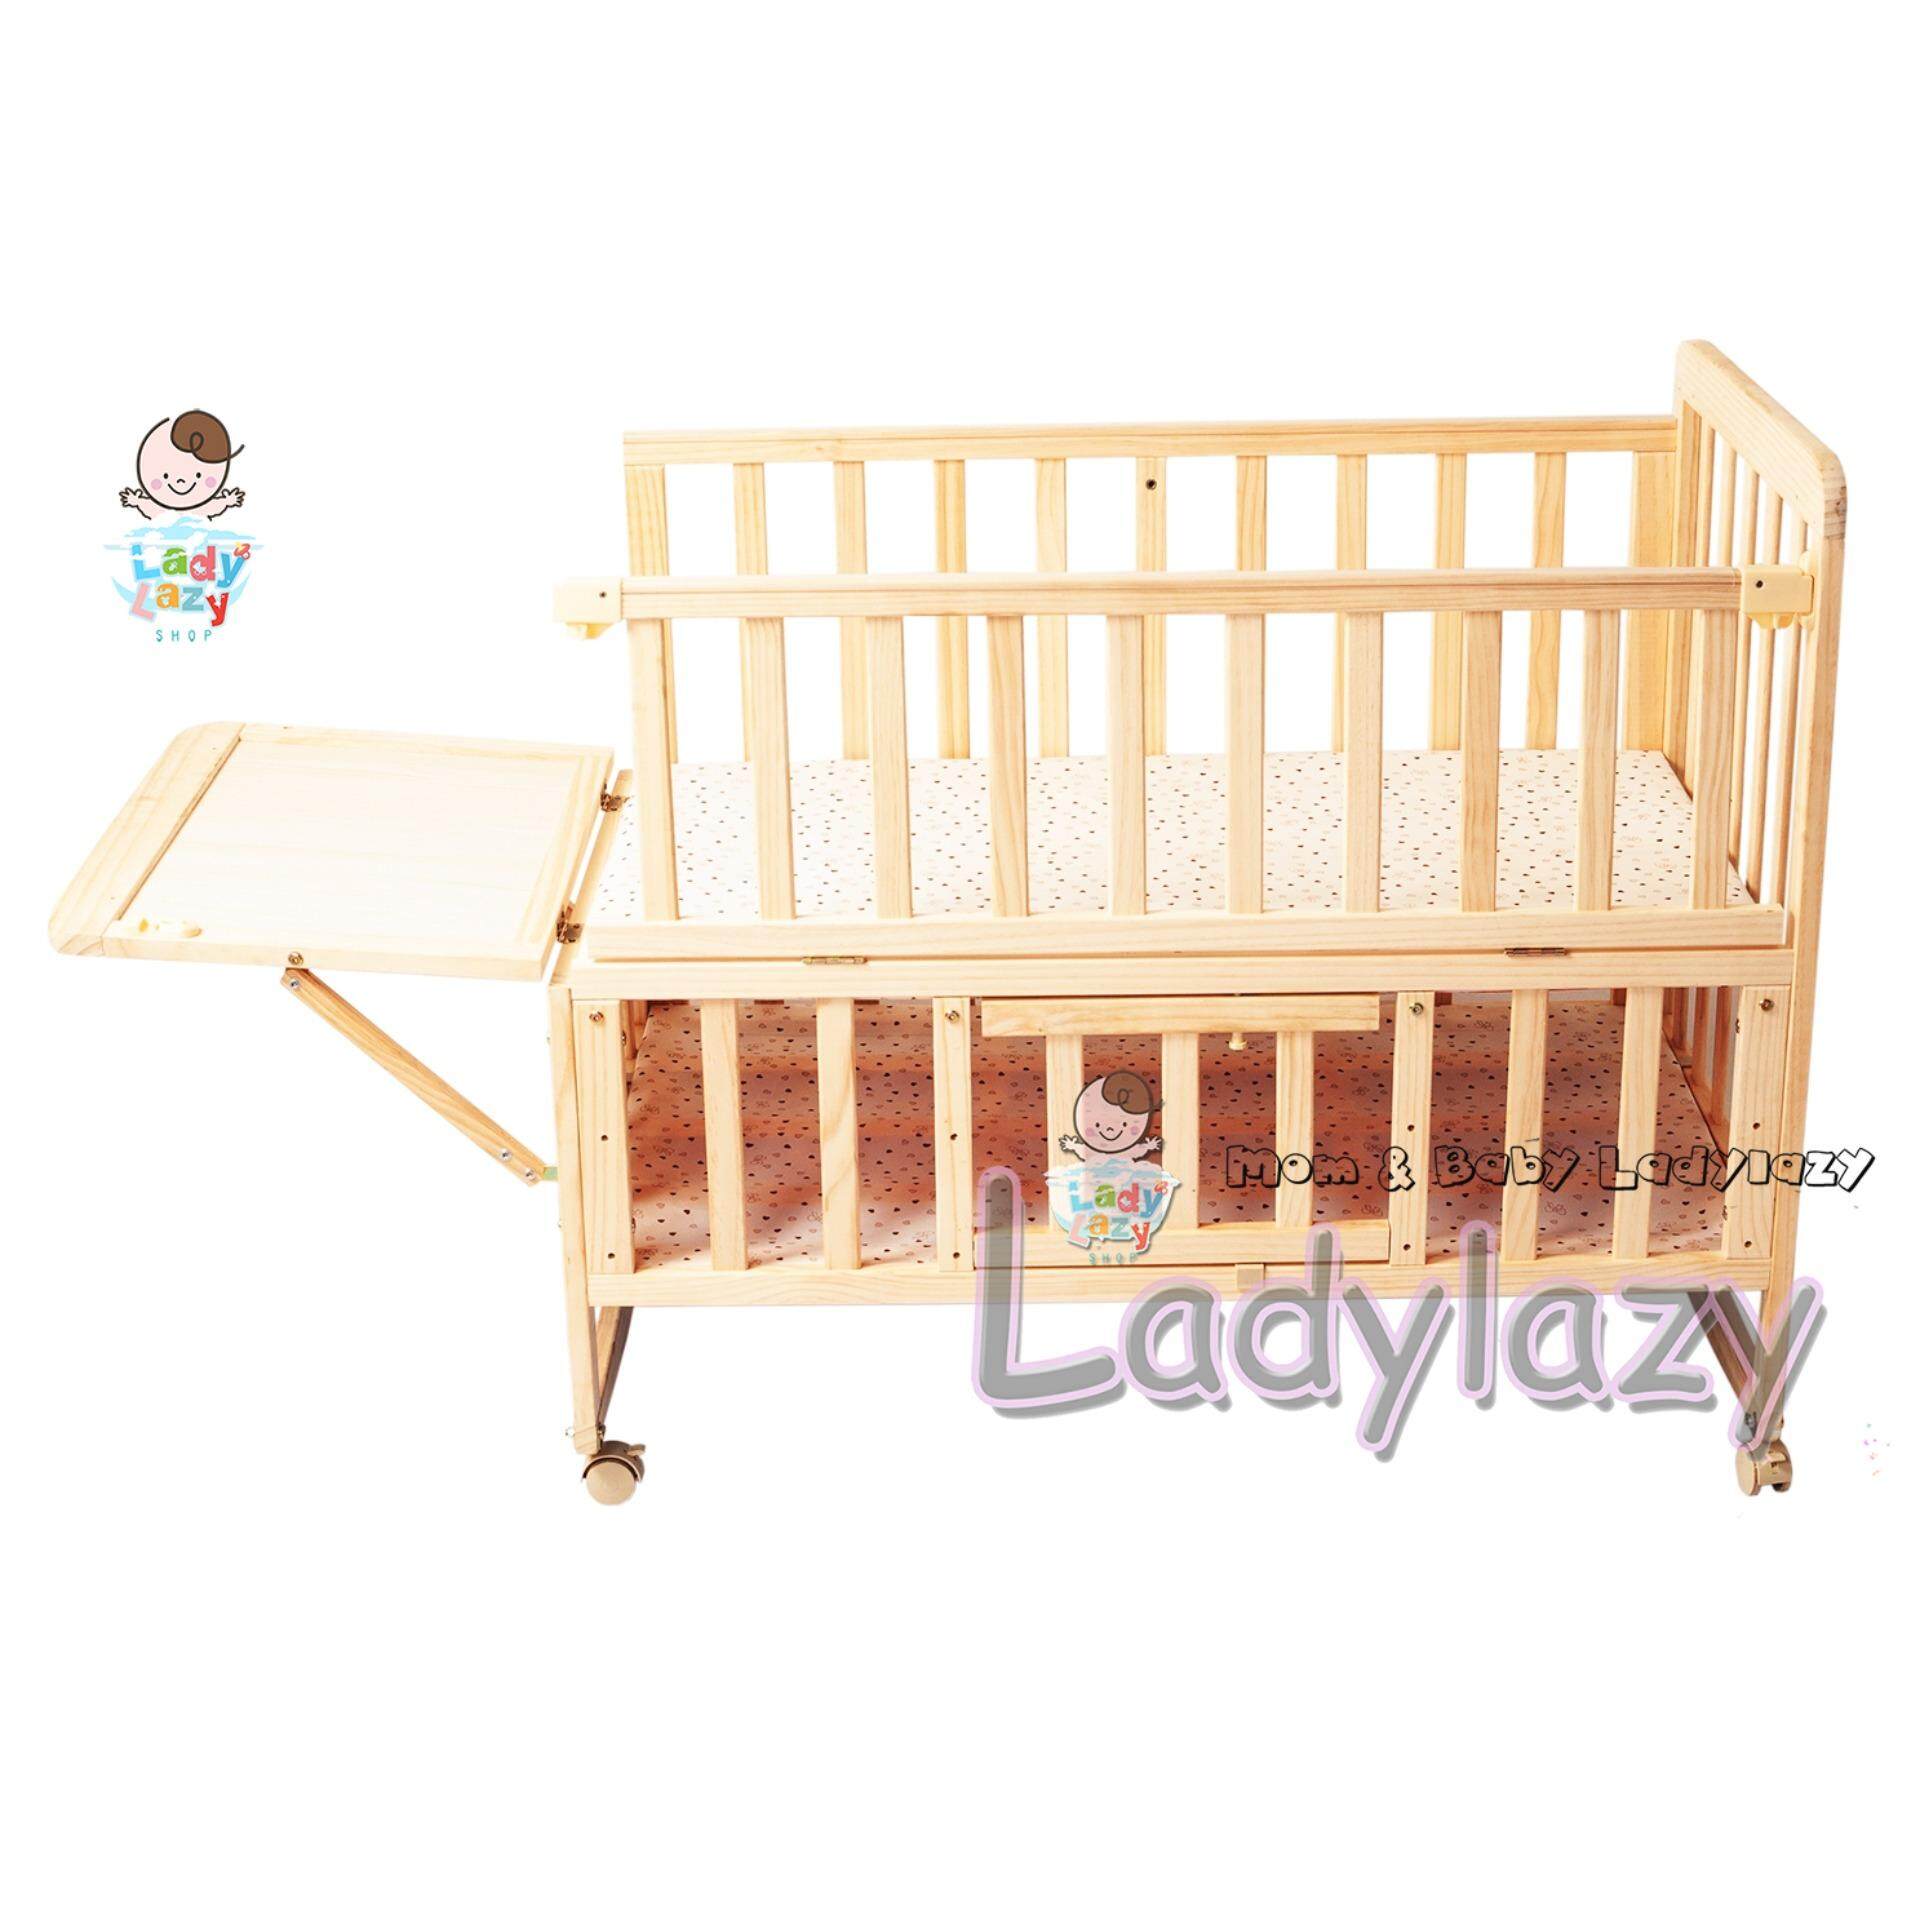 Ladylazyเตียงเด็ก เตียงนอนไม้เด็ก เข็นได้/โยกได้ พื้นเตียงปรับระดับได้ ทำจากไม้สนแท้ 100%